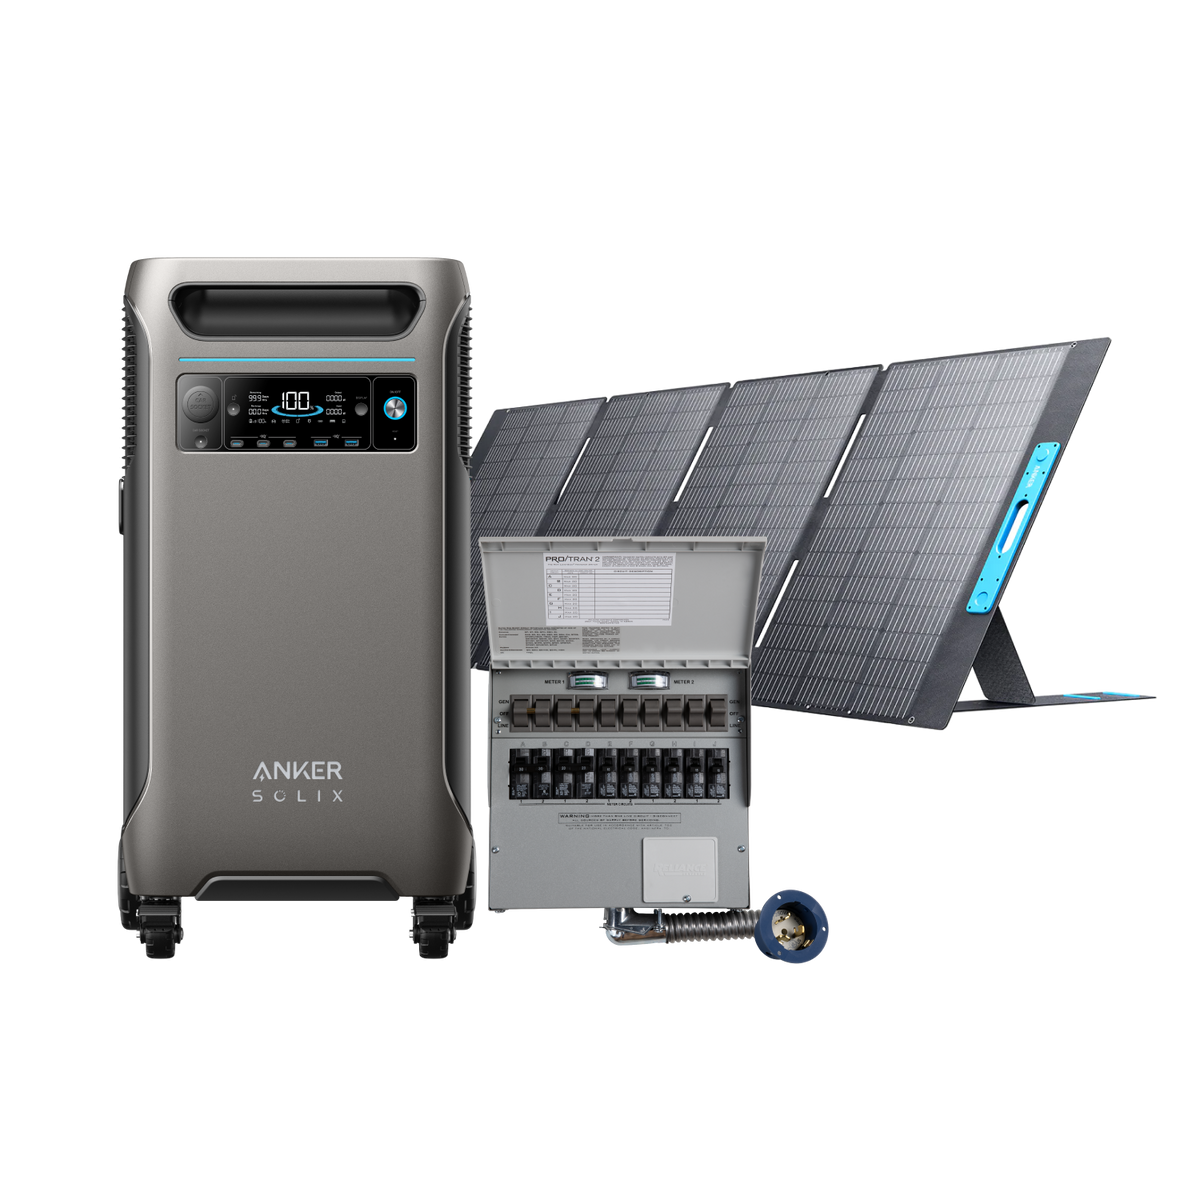 Anker SOLIX F3800 + Home Backup Kit + 1 × 400W Solar Panel